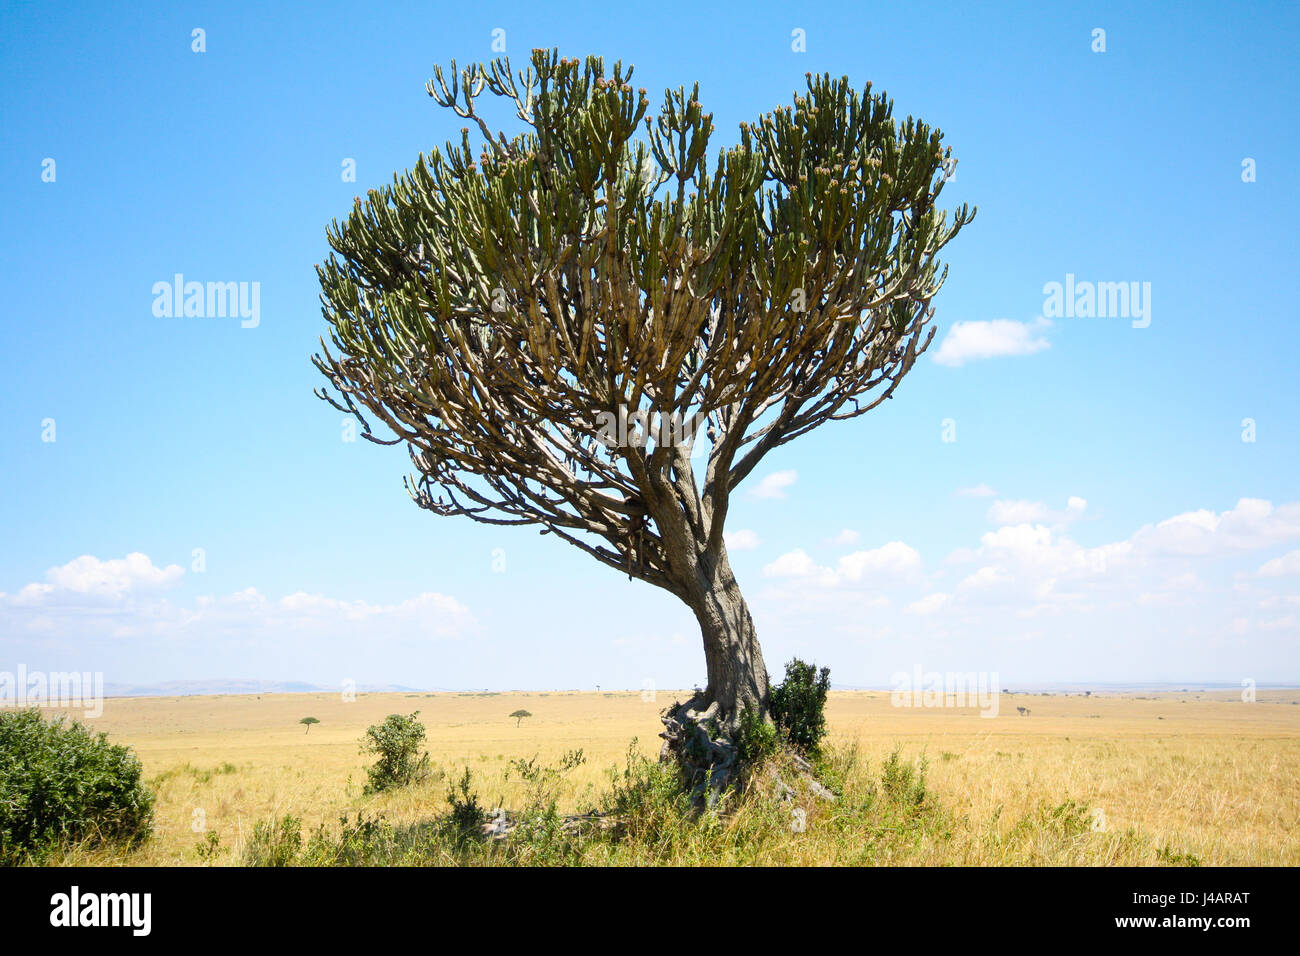 Candelabra tree (Euphorbia ingens) against blue sky and yellow grass in Masai Mara National Park, Kenya Stock Photo